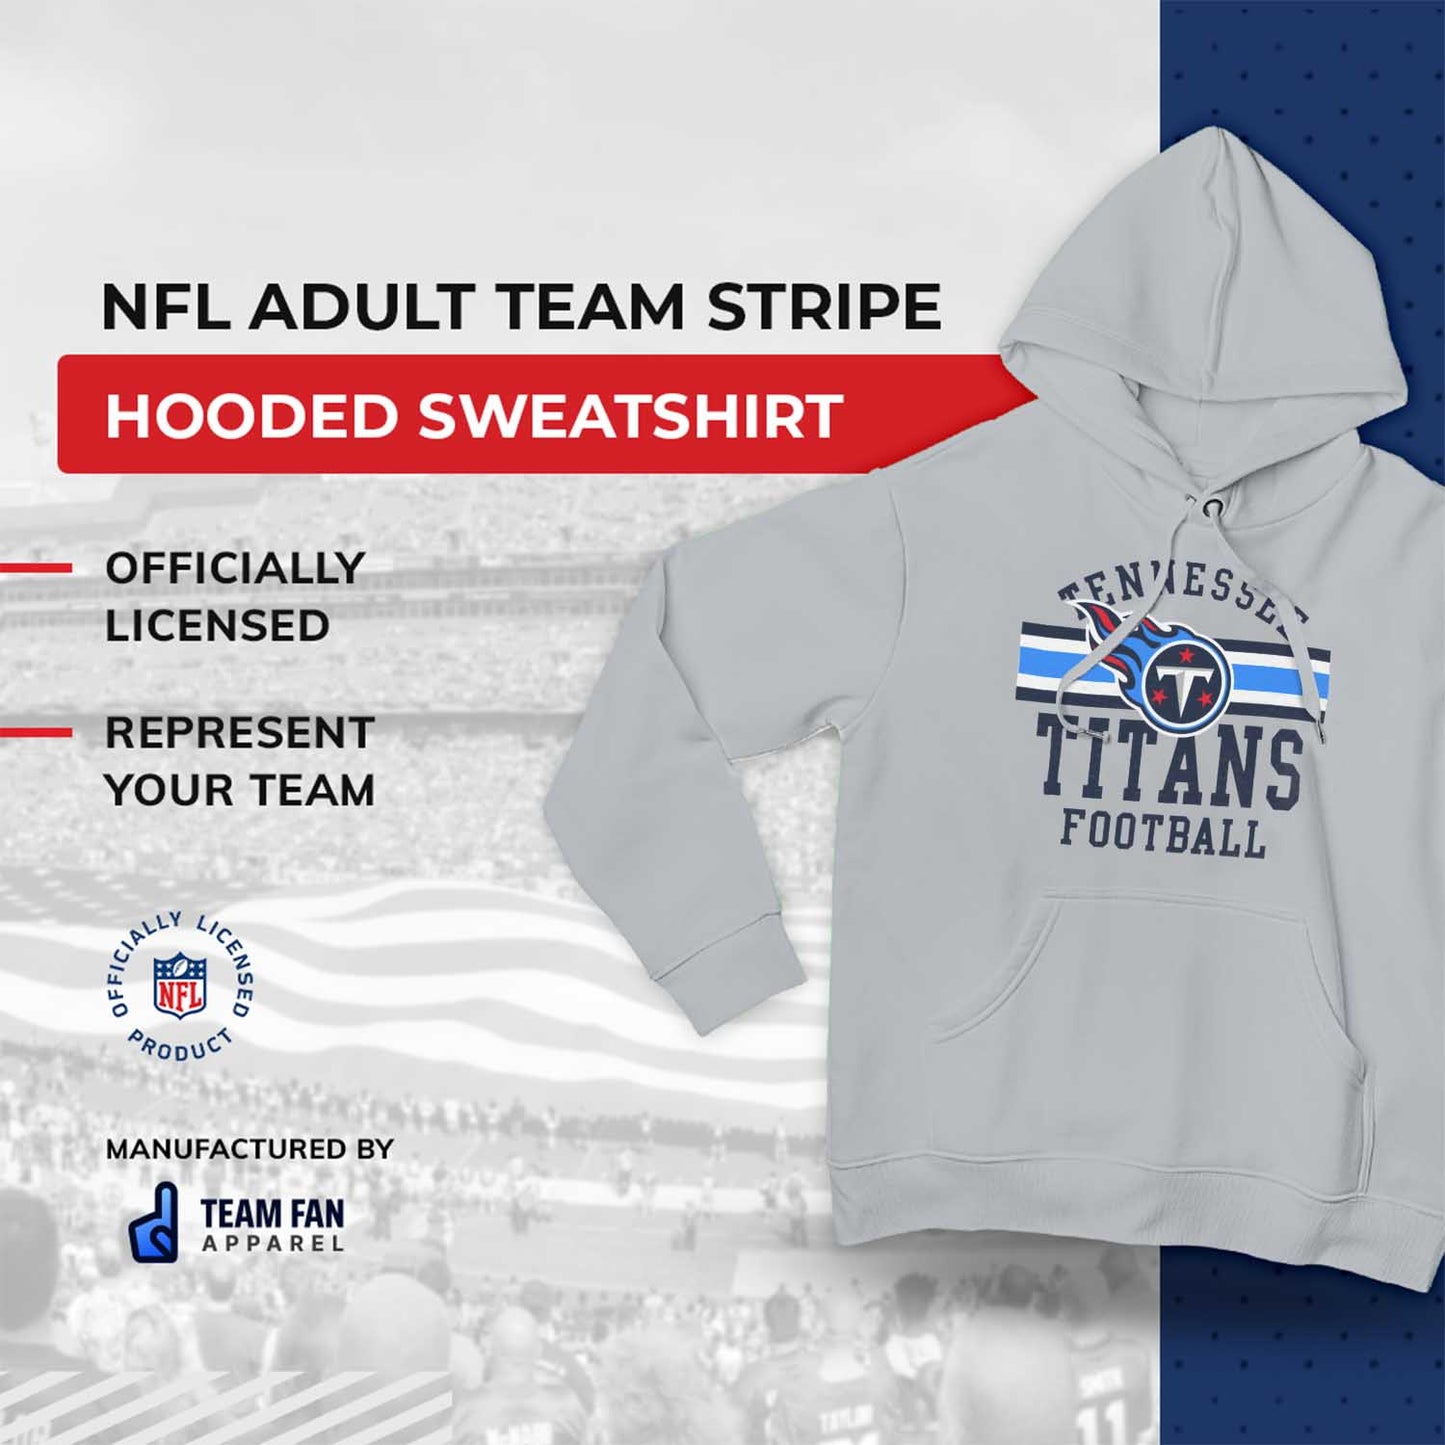 Tennessee Titans NFL Team Stripe Hooded Sweatshirt- Soft Pullover Sports Hoodie For Men & Women - Sport Gray